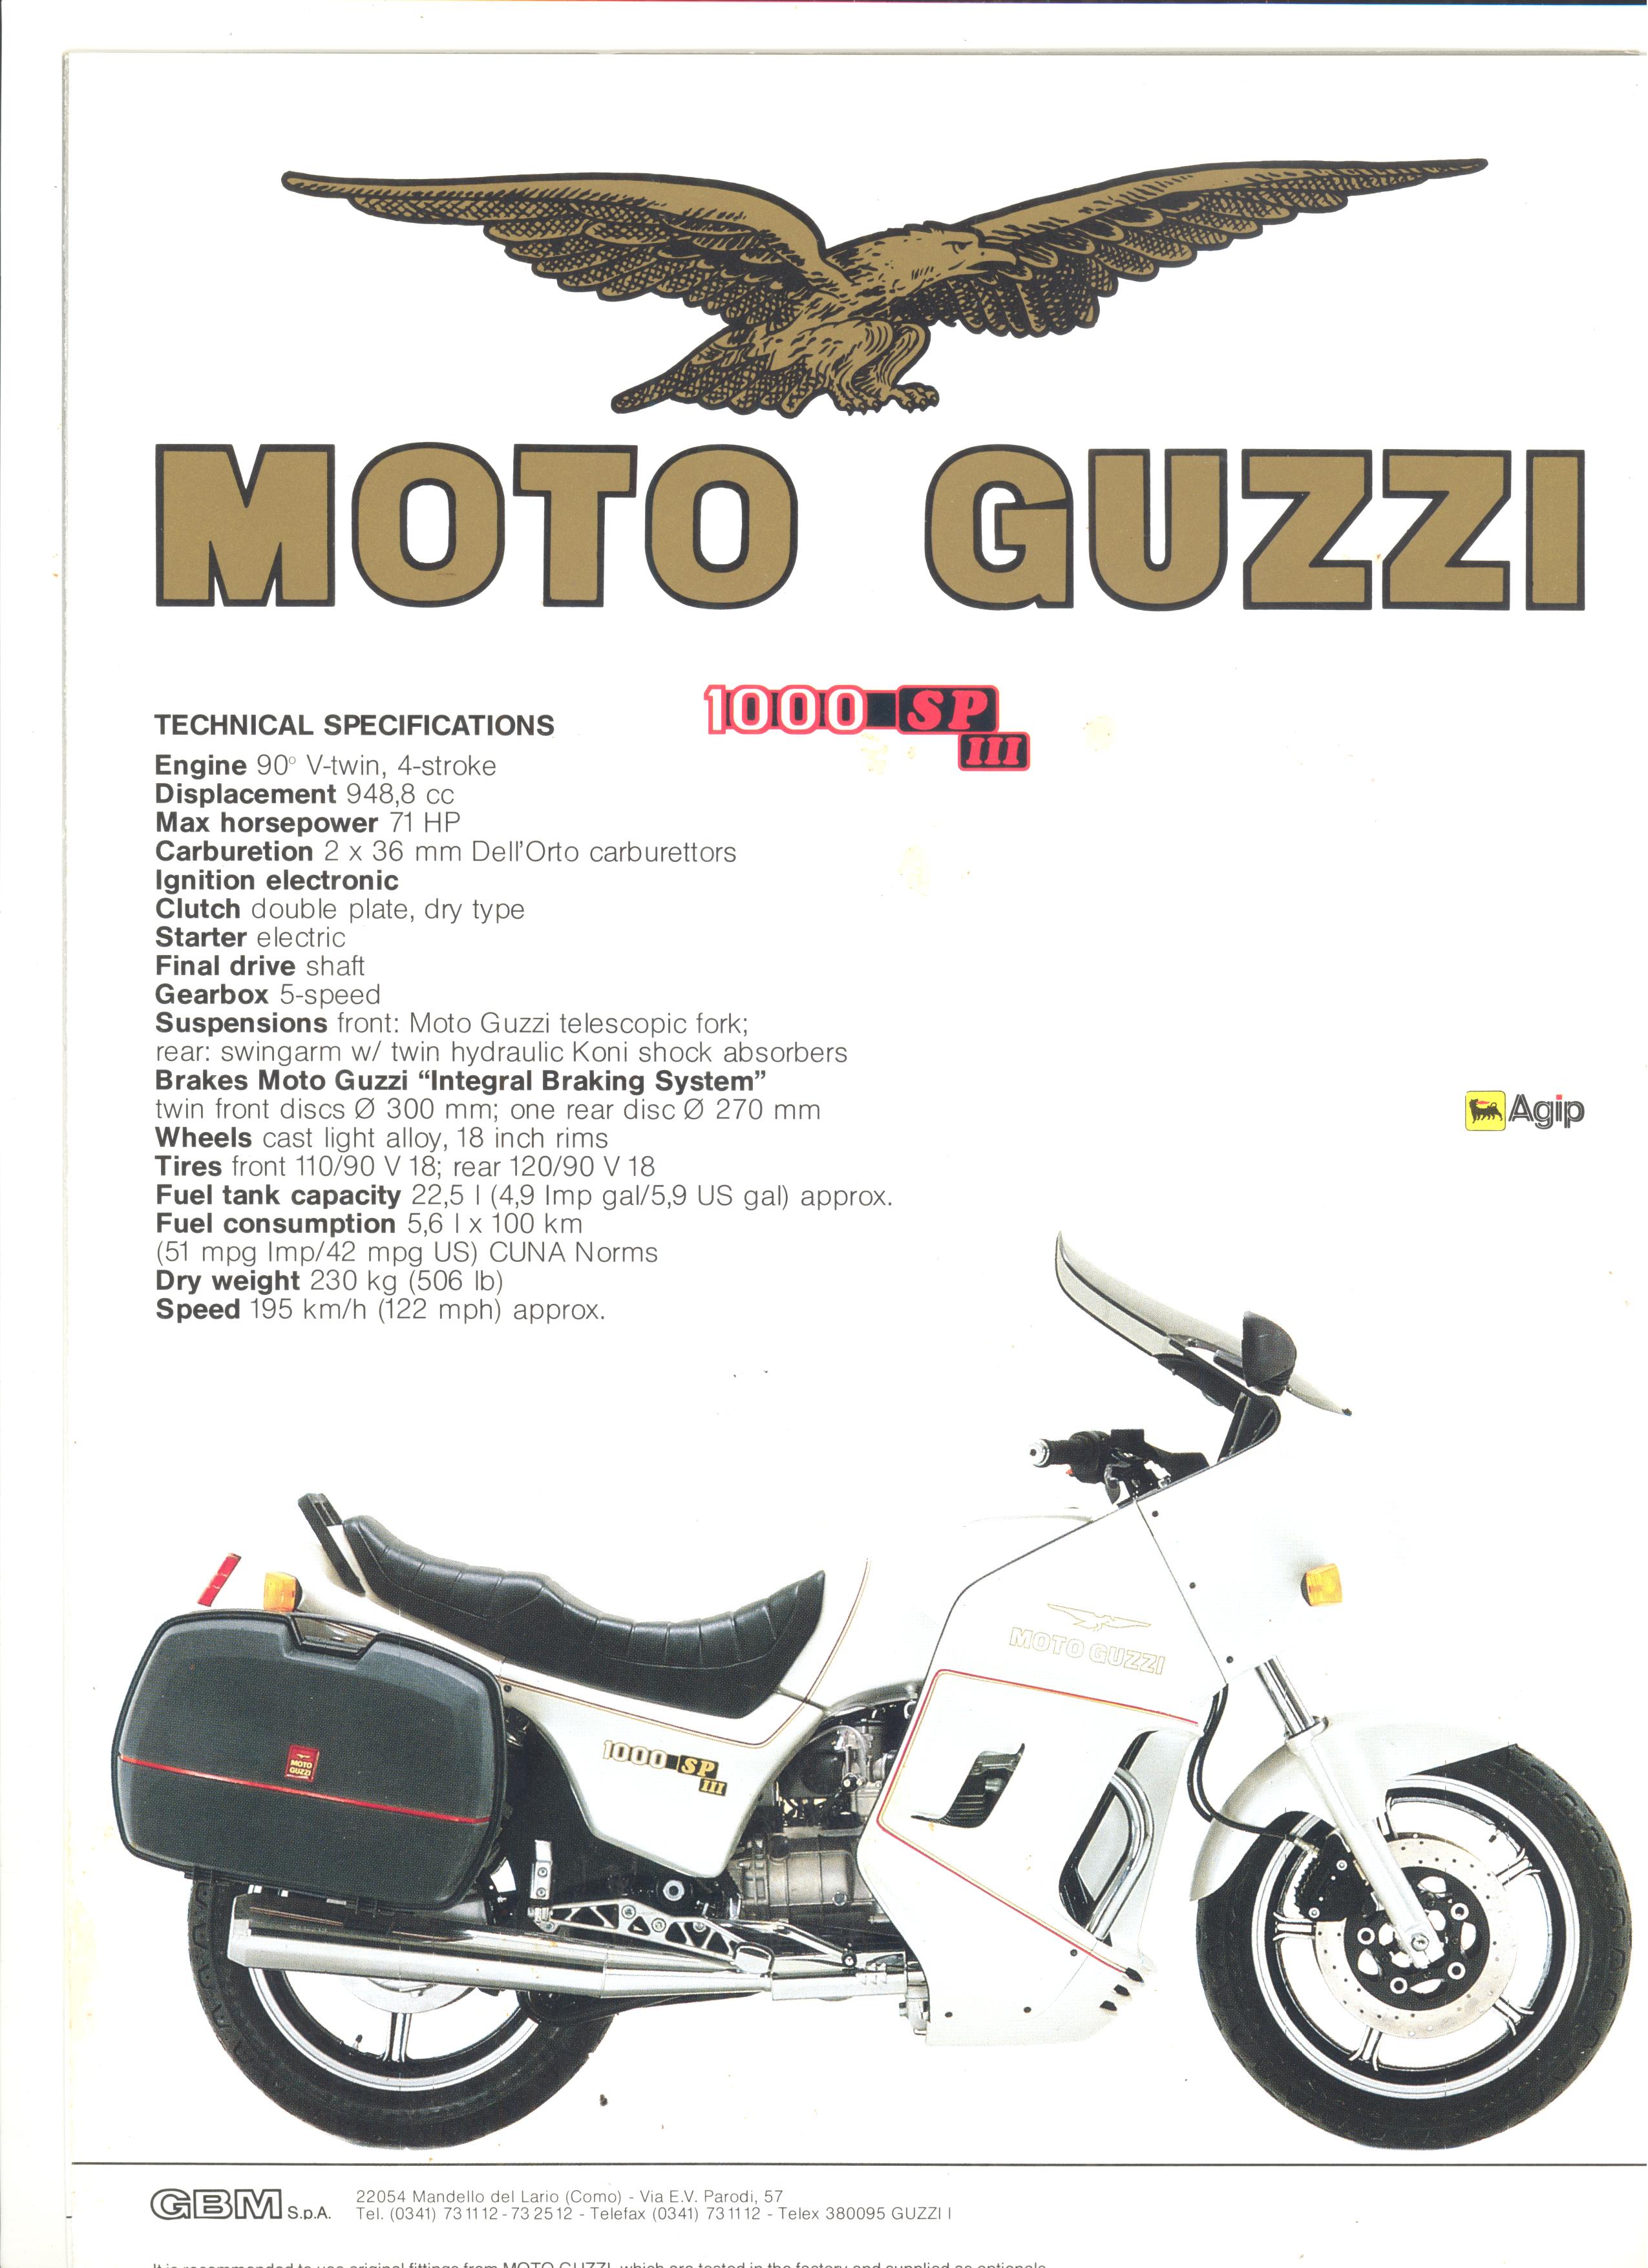 Moto Guzzi factory brochure: 1000 SP III